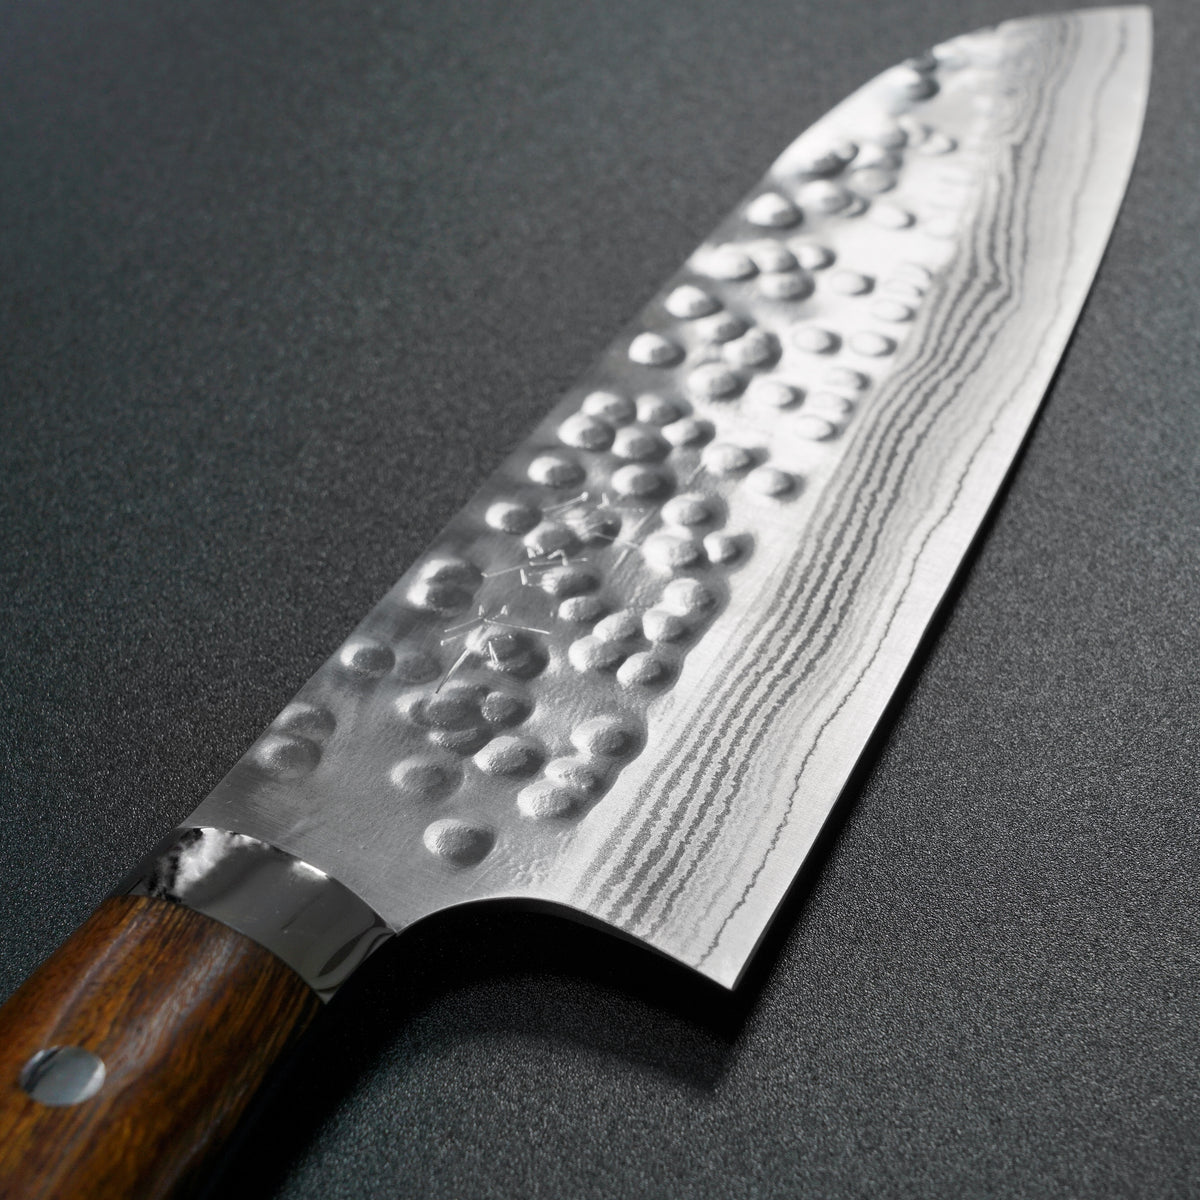 Hammered Stainless Steel Series - Santoku knife 18cm – ShinraiKnives